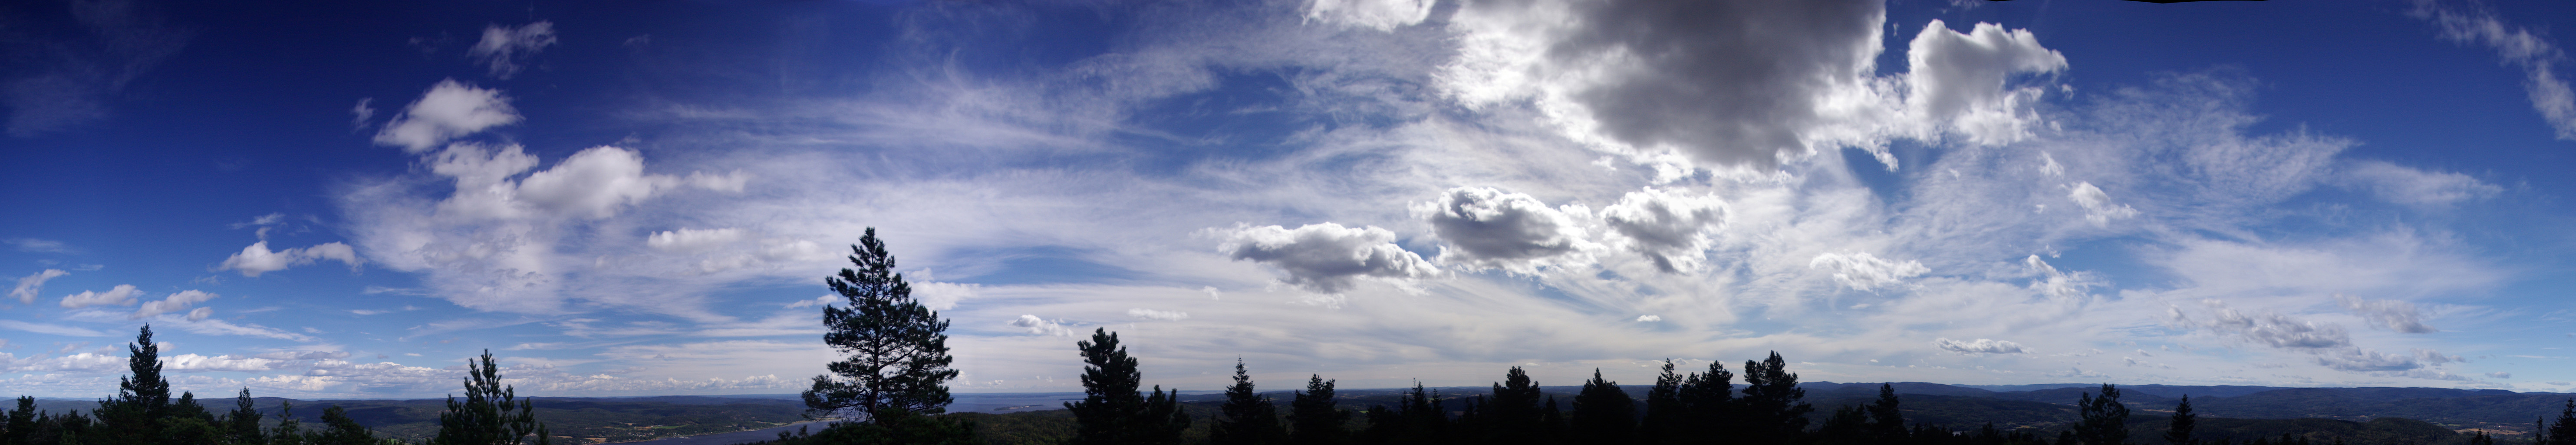 Hvittingen Sky Panorama by brotulix on DeviantArt